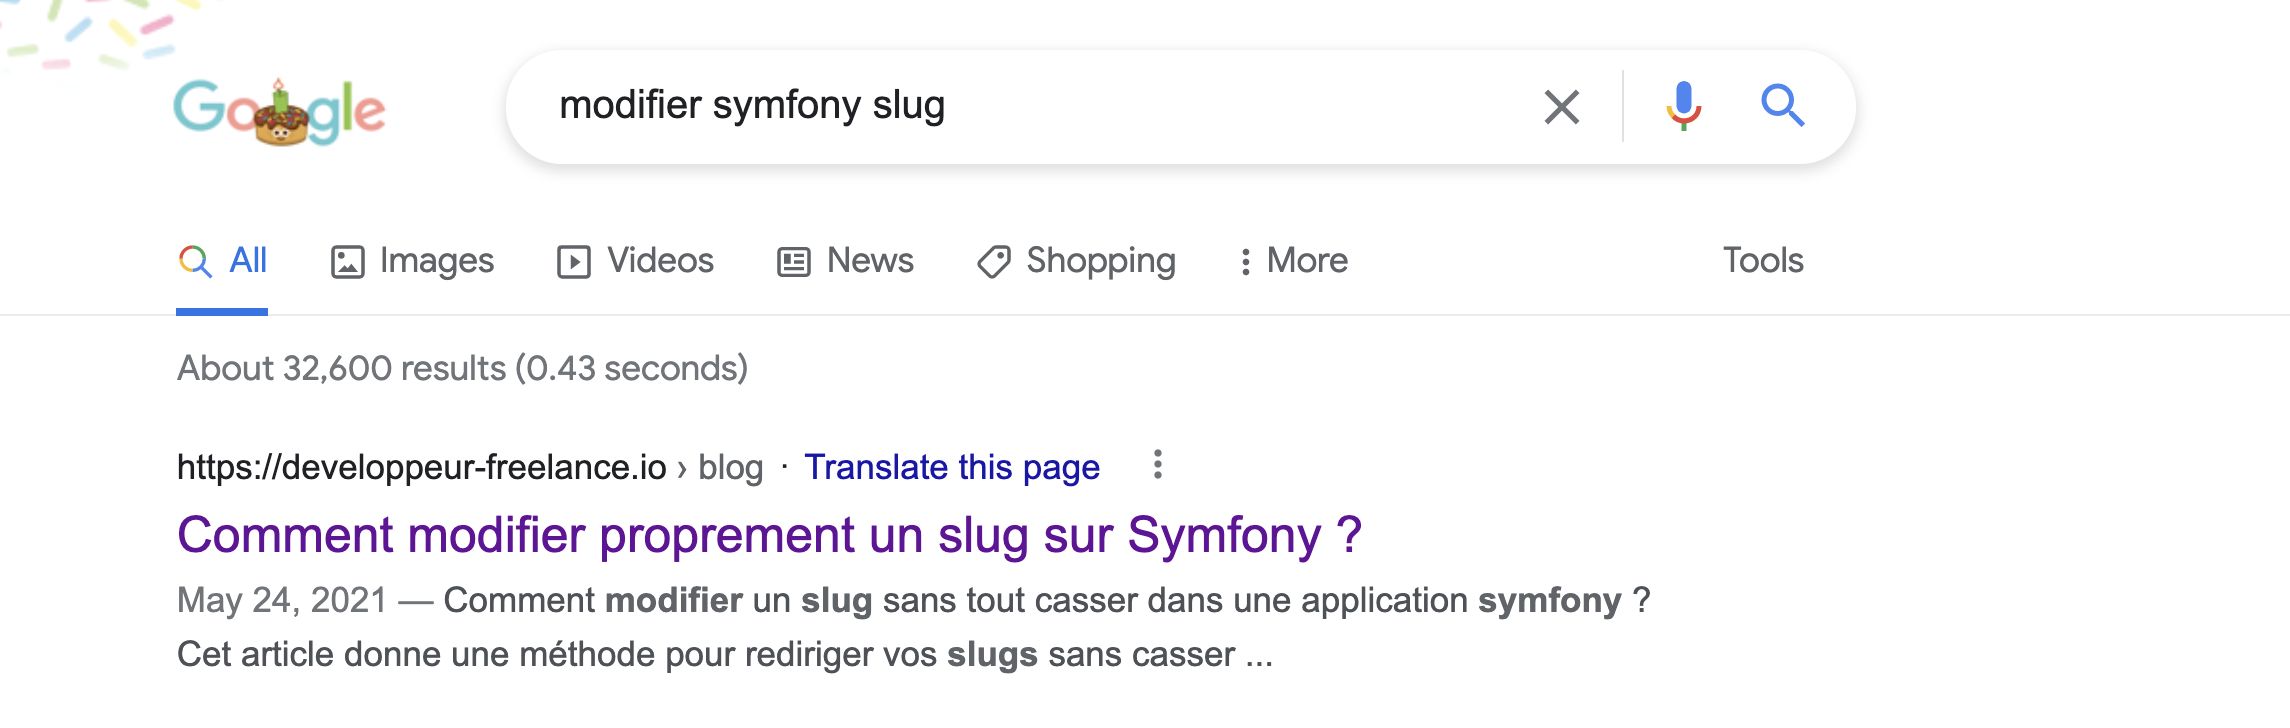 Google search - How do I edit a Symfony slug?